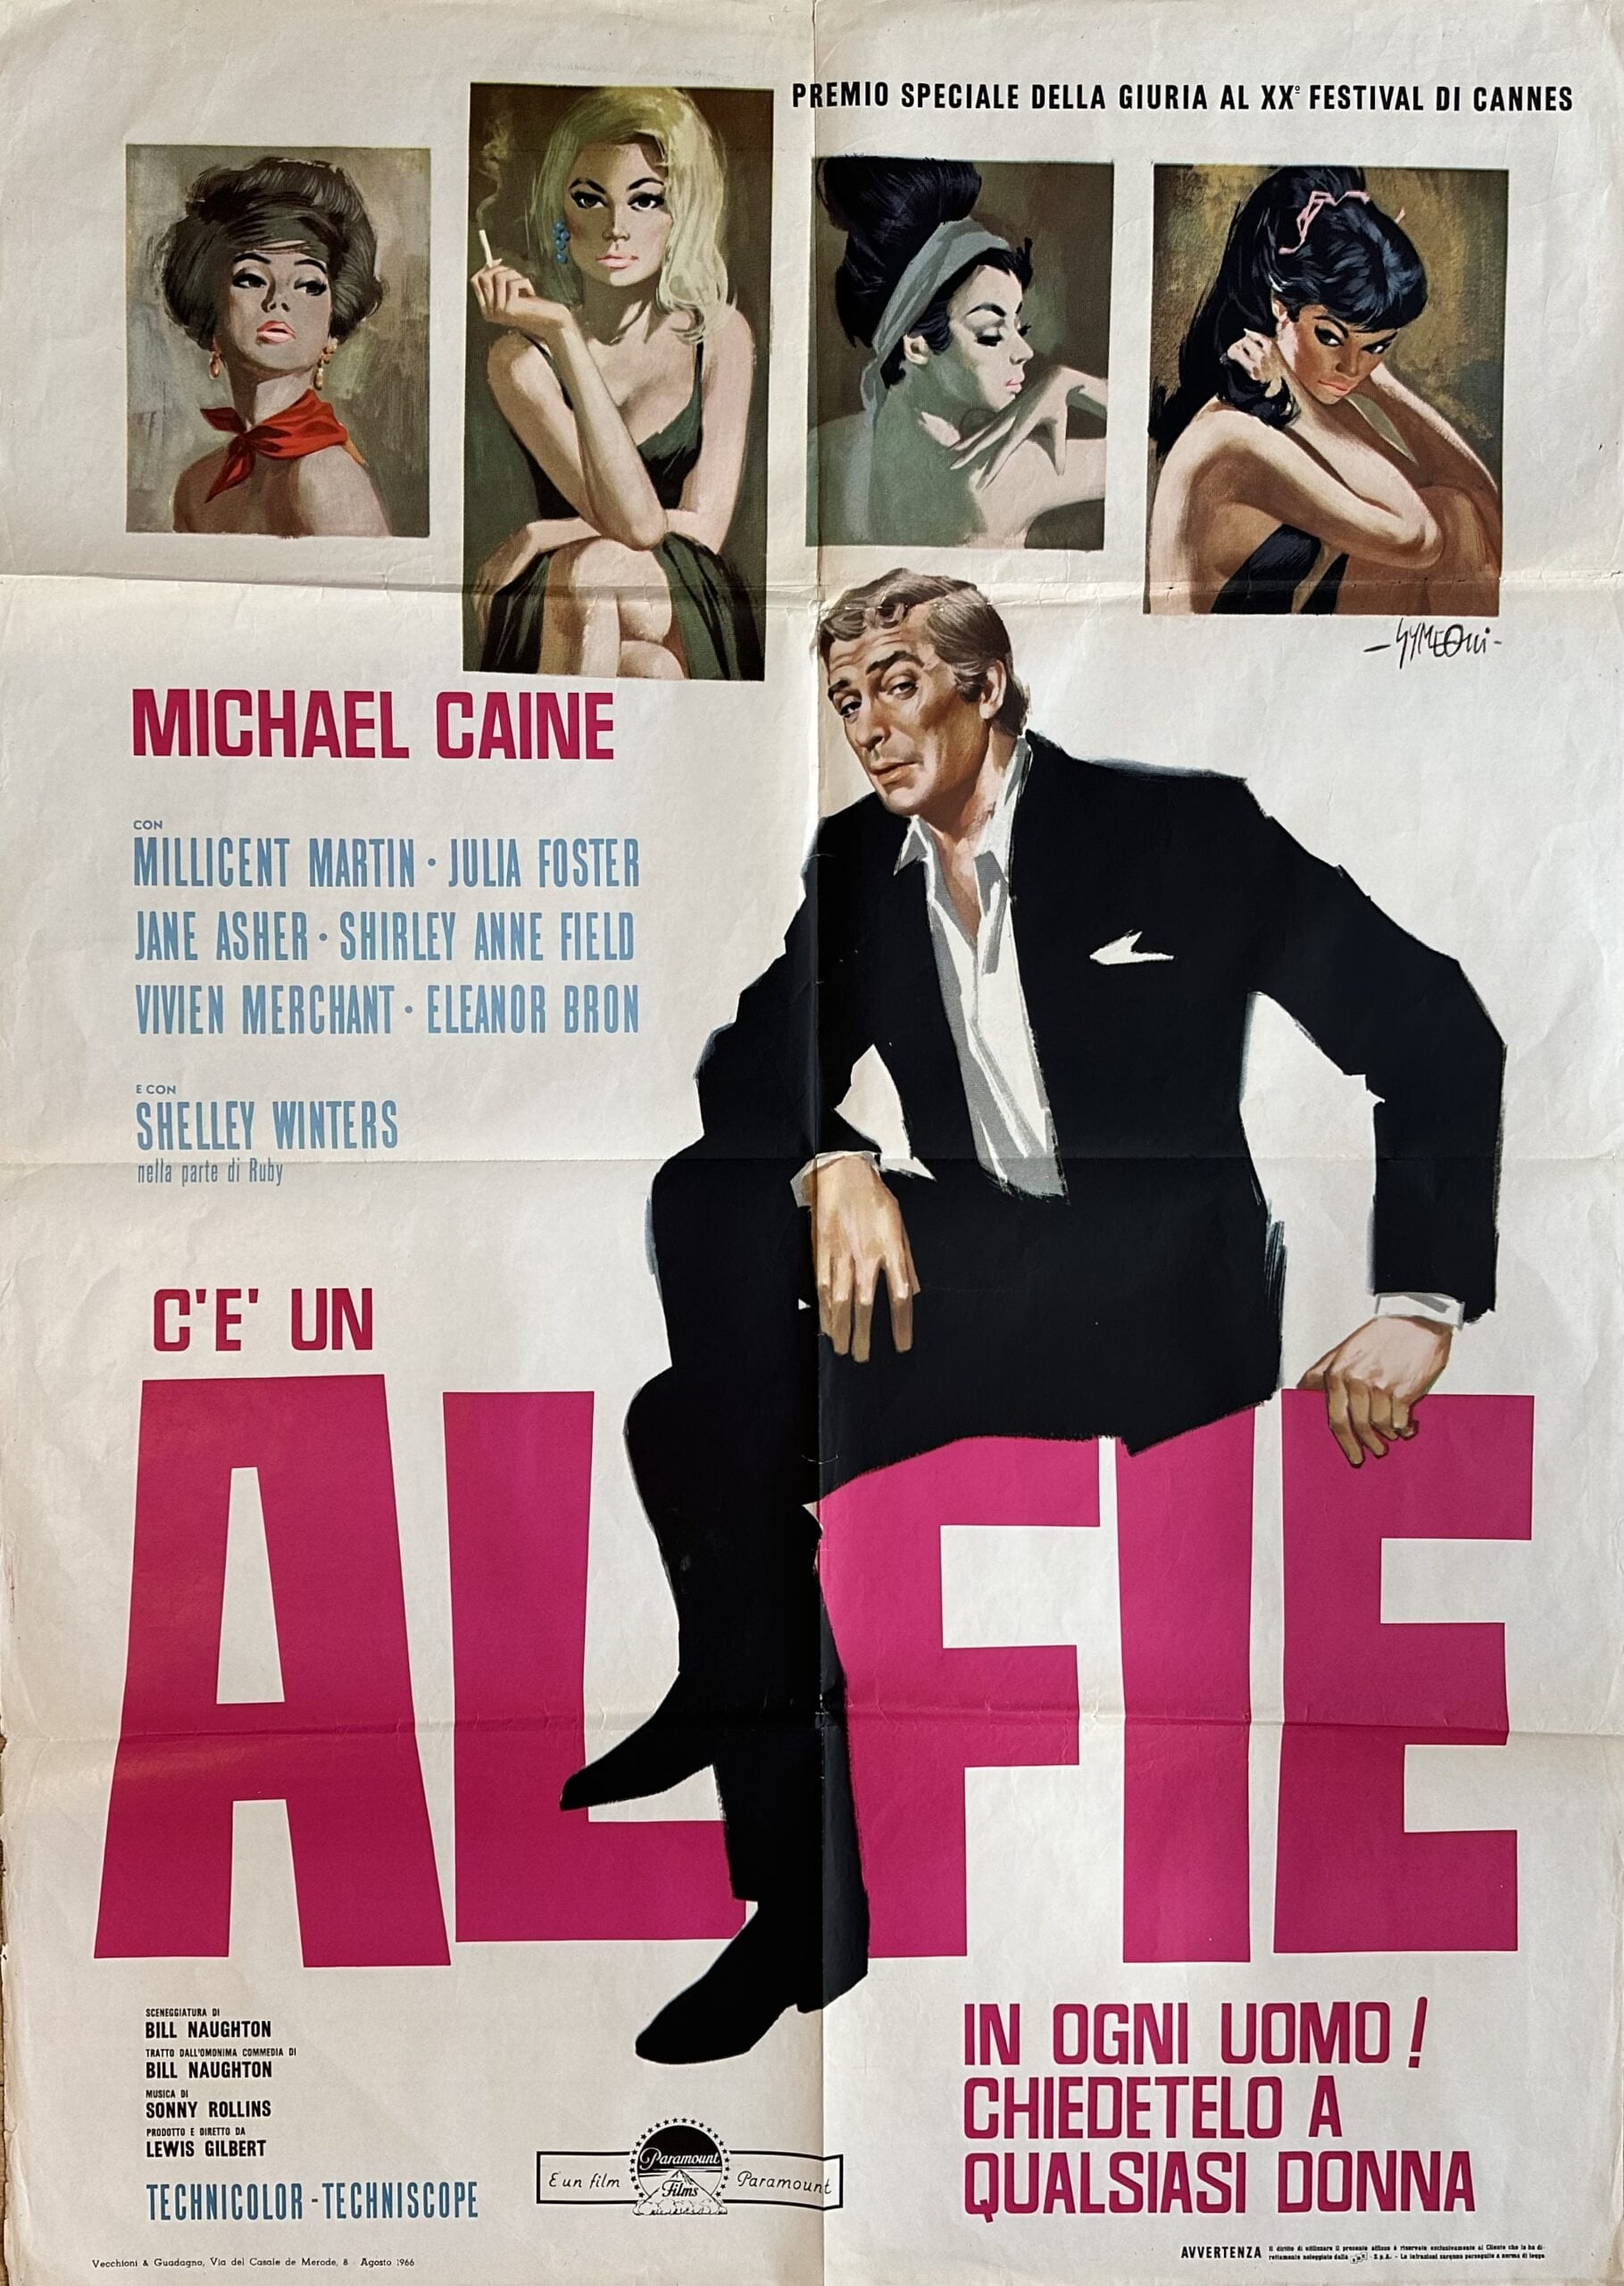 Original vintage cinema movie poster for Alfie, starring Michael Caine